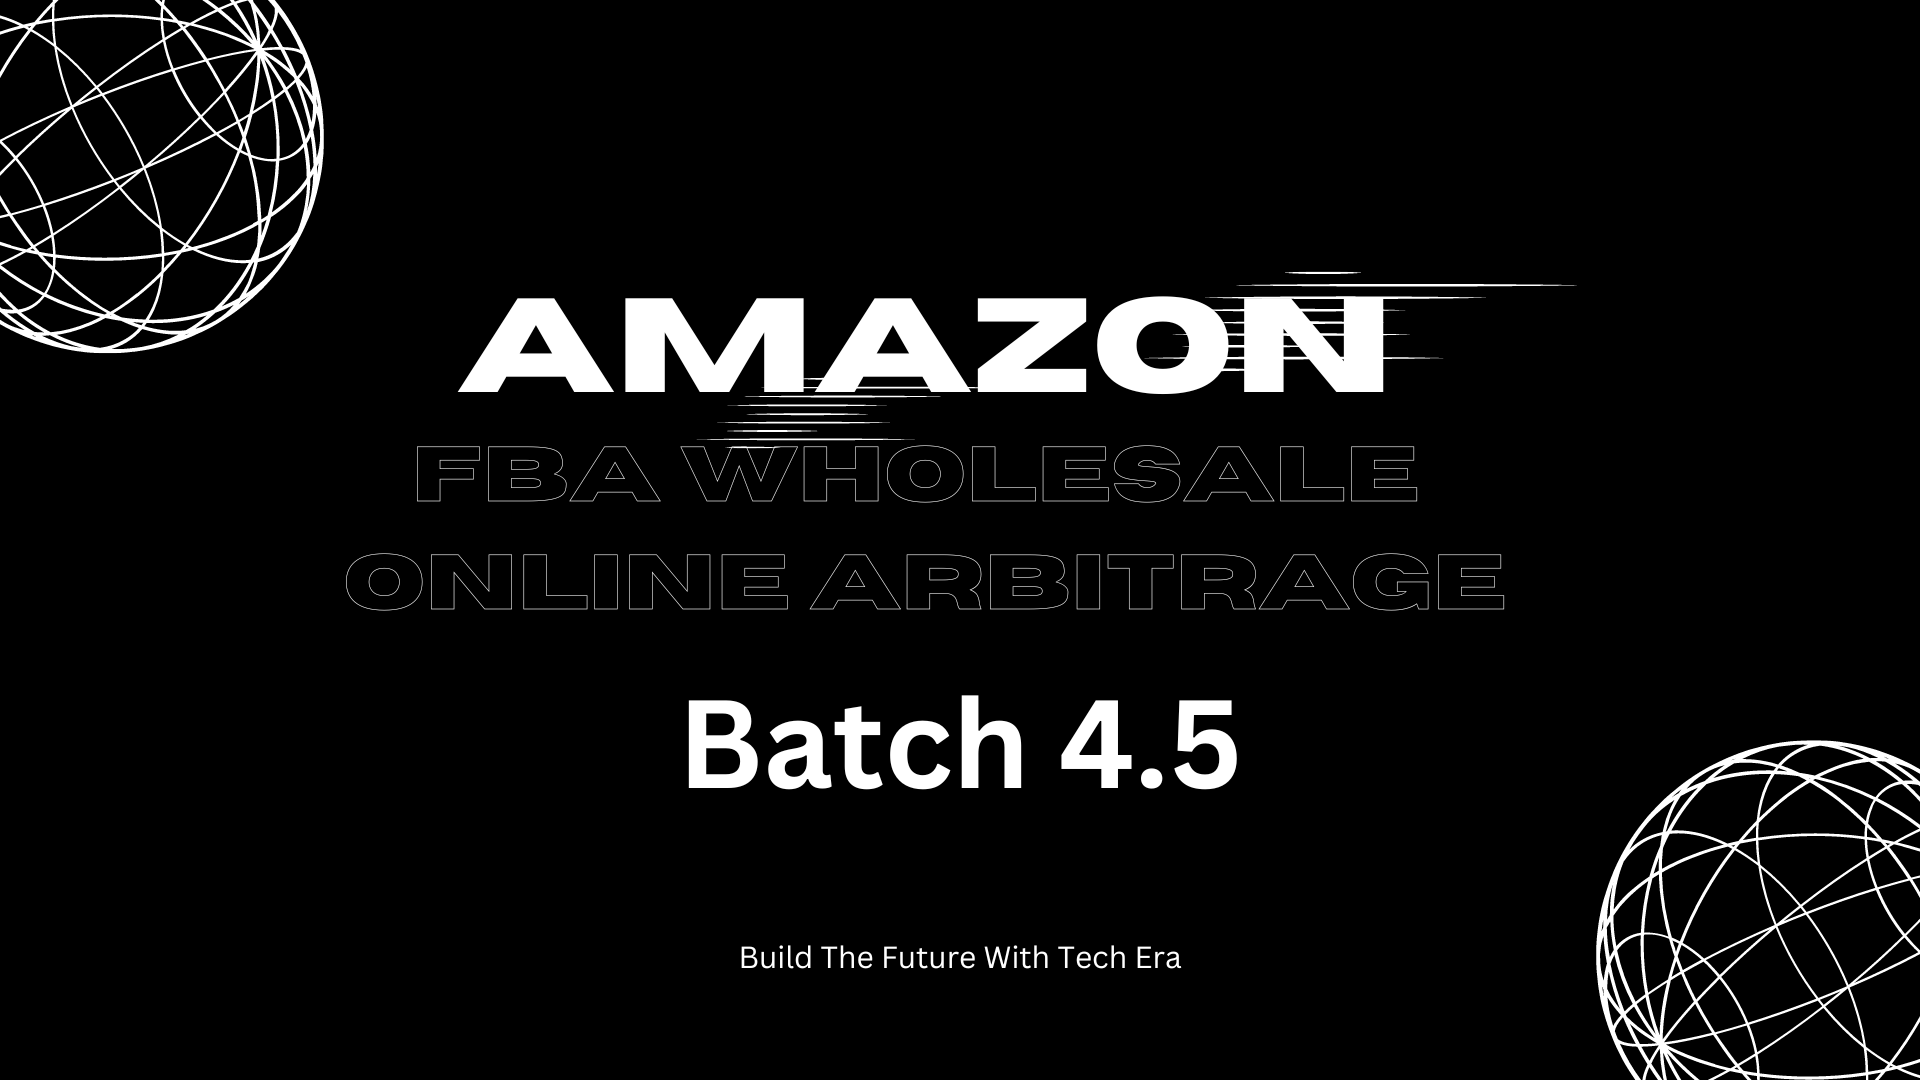 Amazon FBA Wholesale Batch 4.5